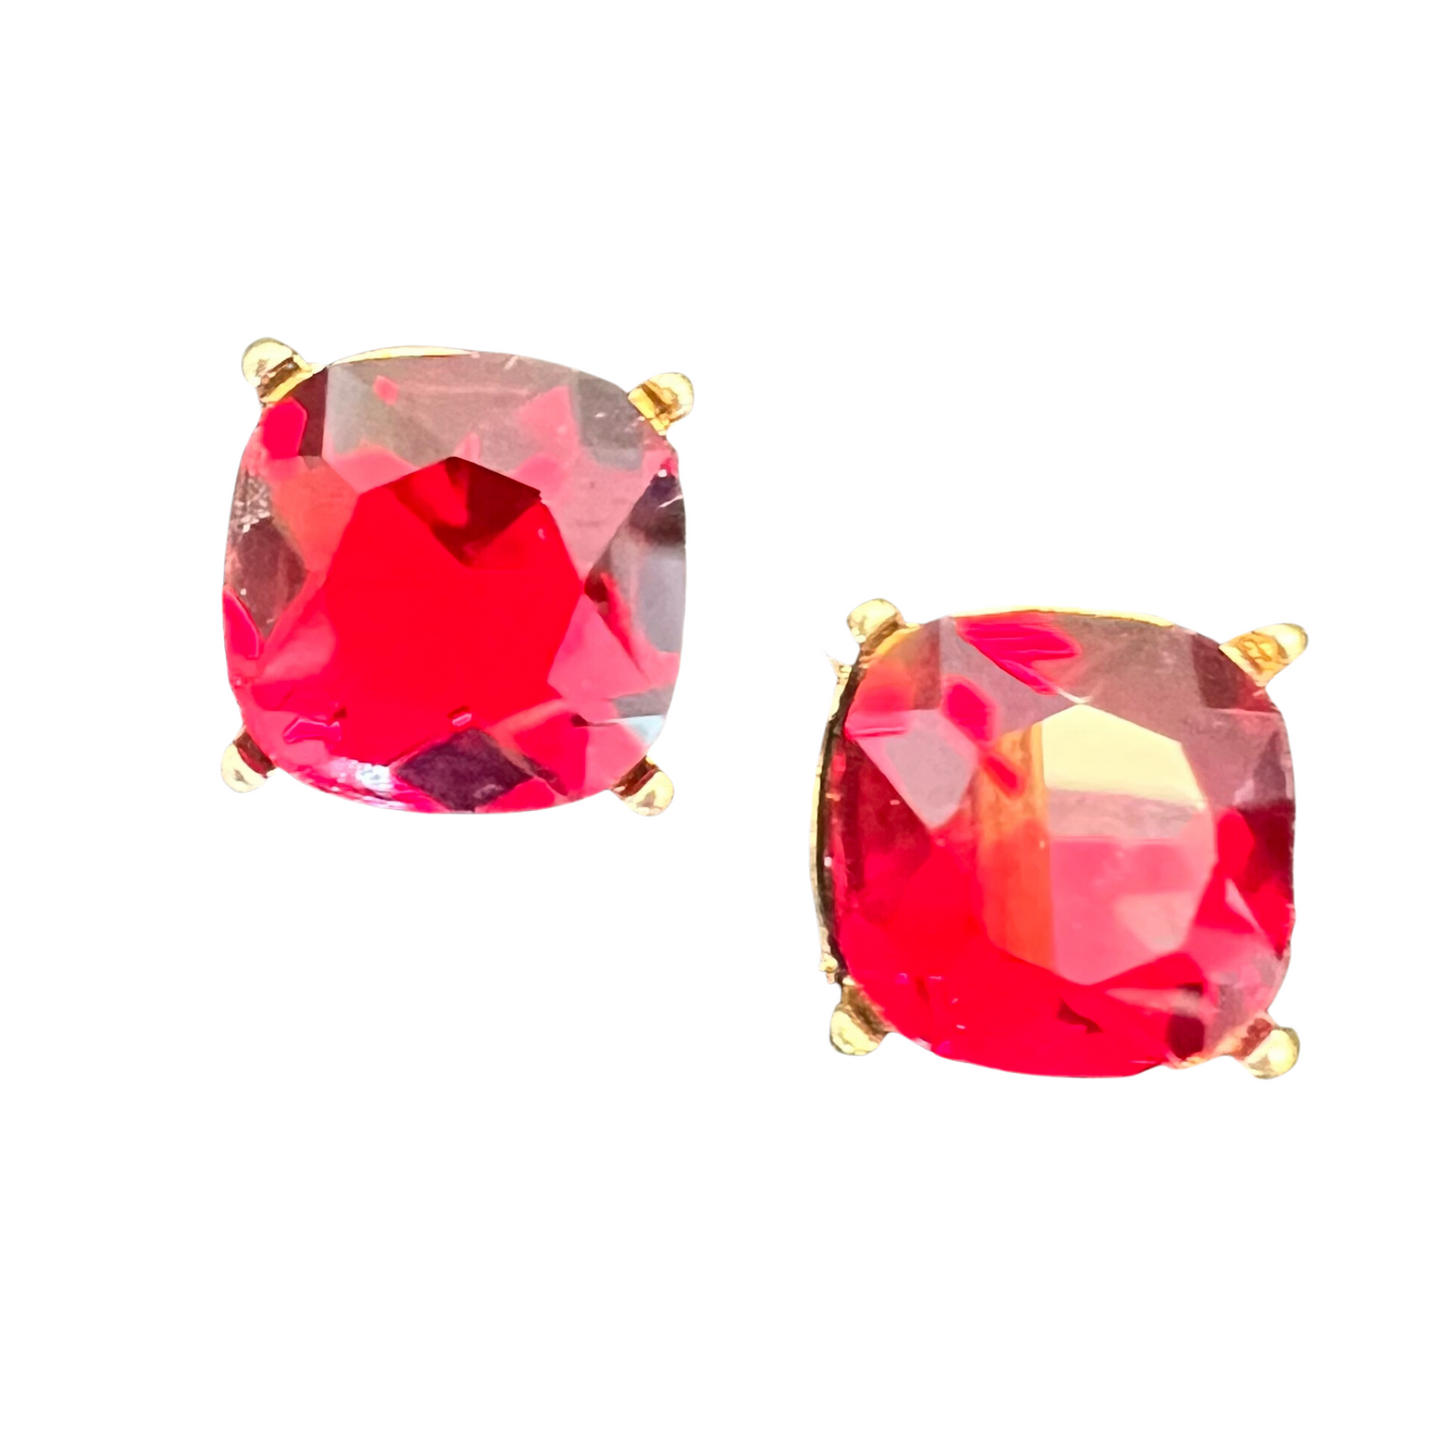 Large red stone stud earrings